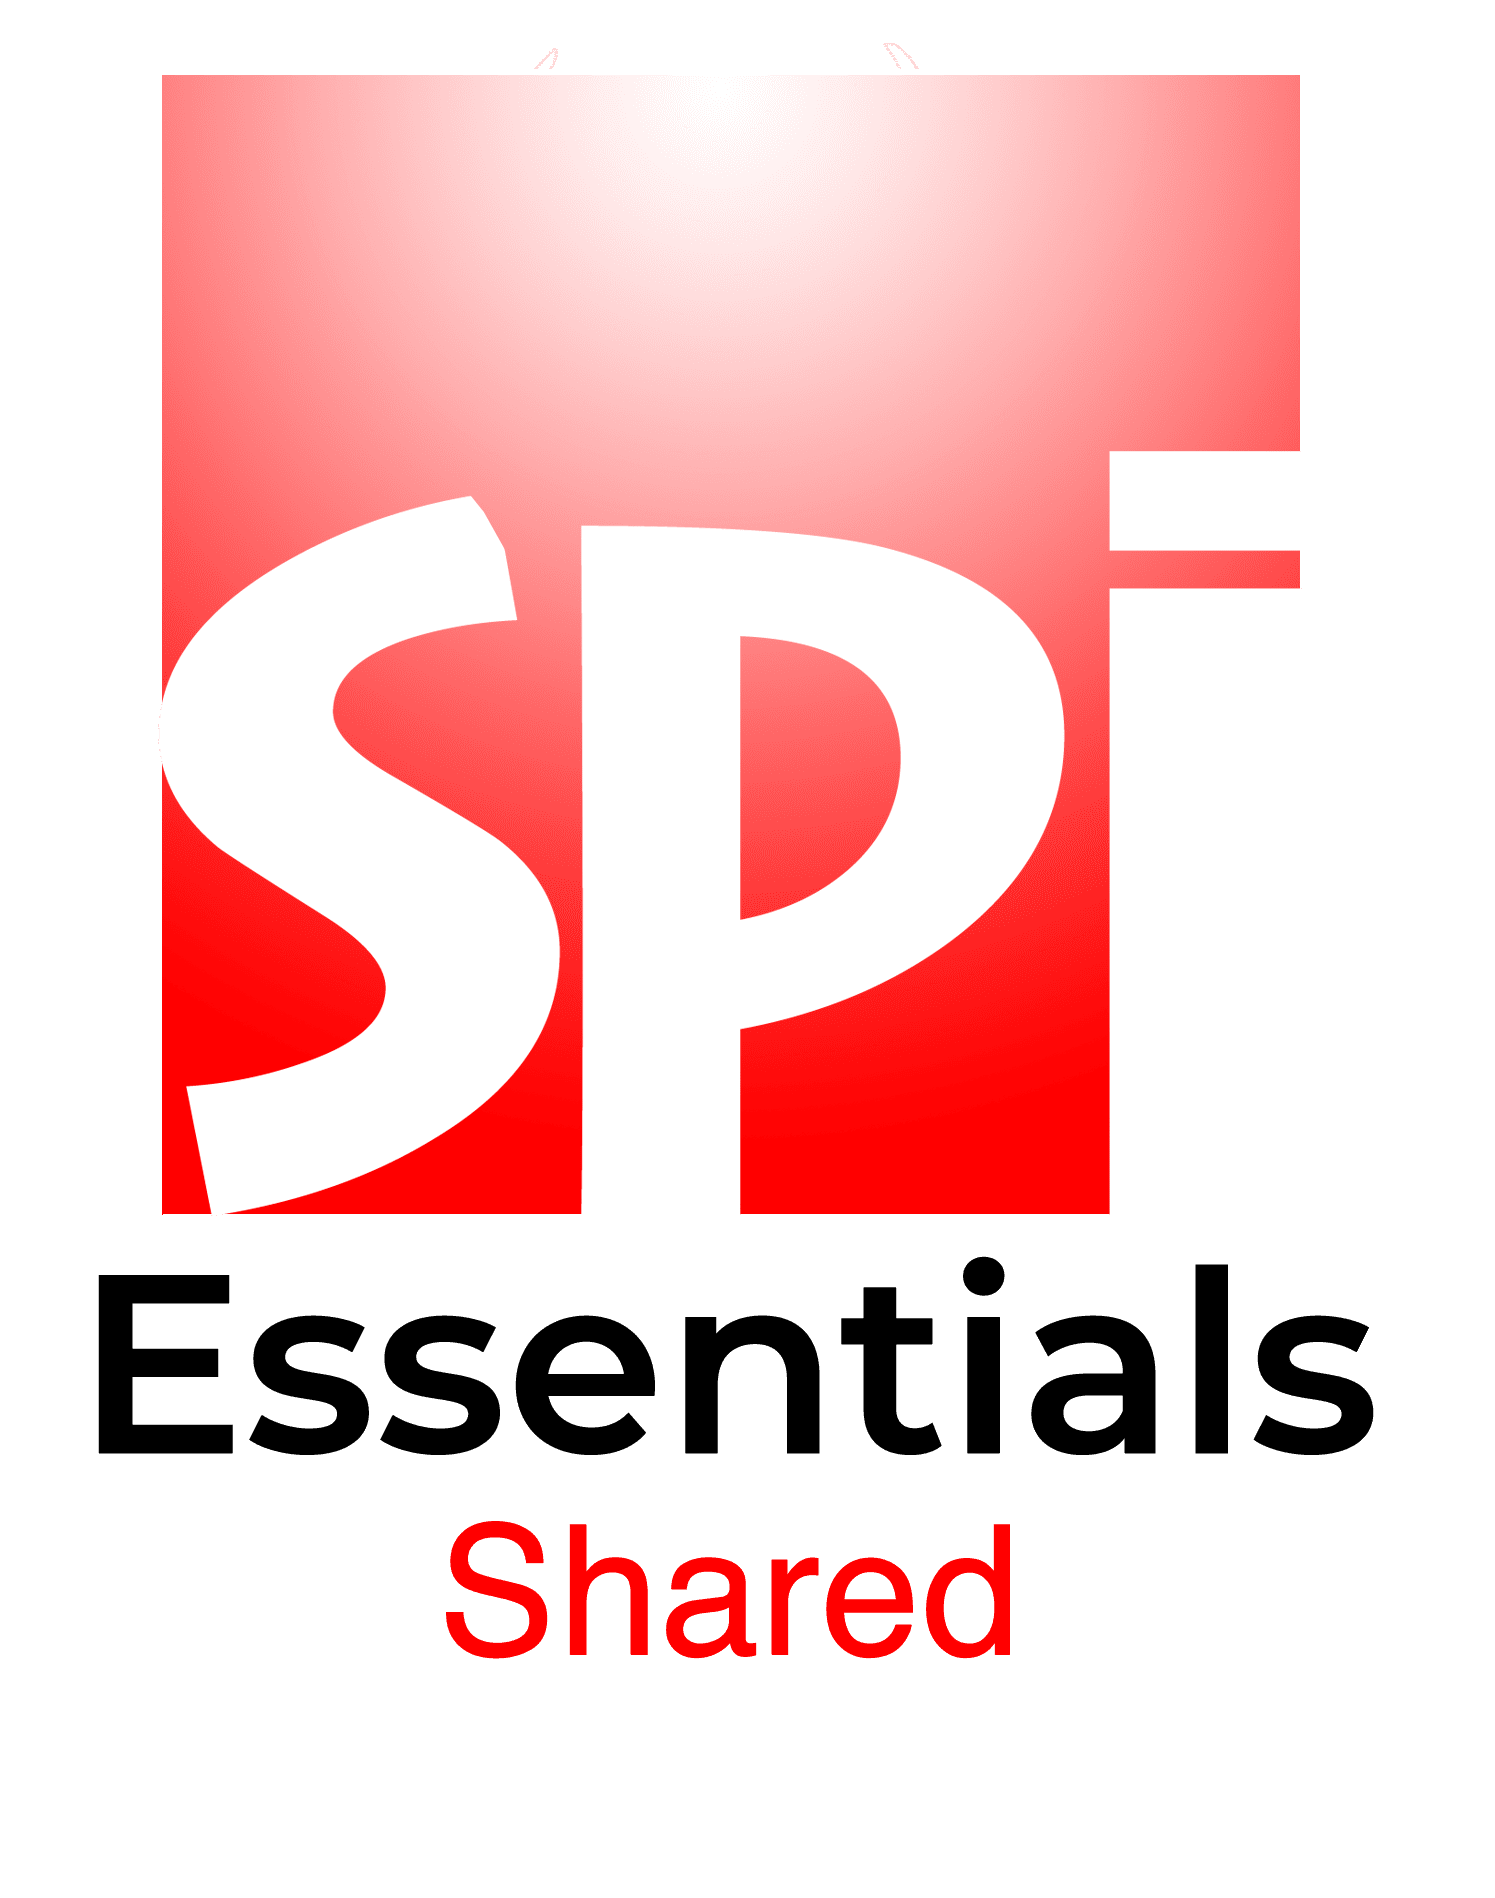 SPI Essentials Shared Hosting